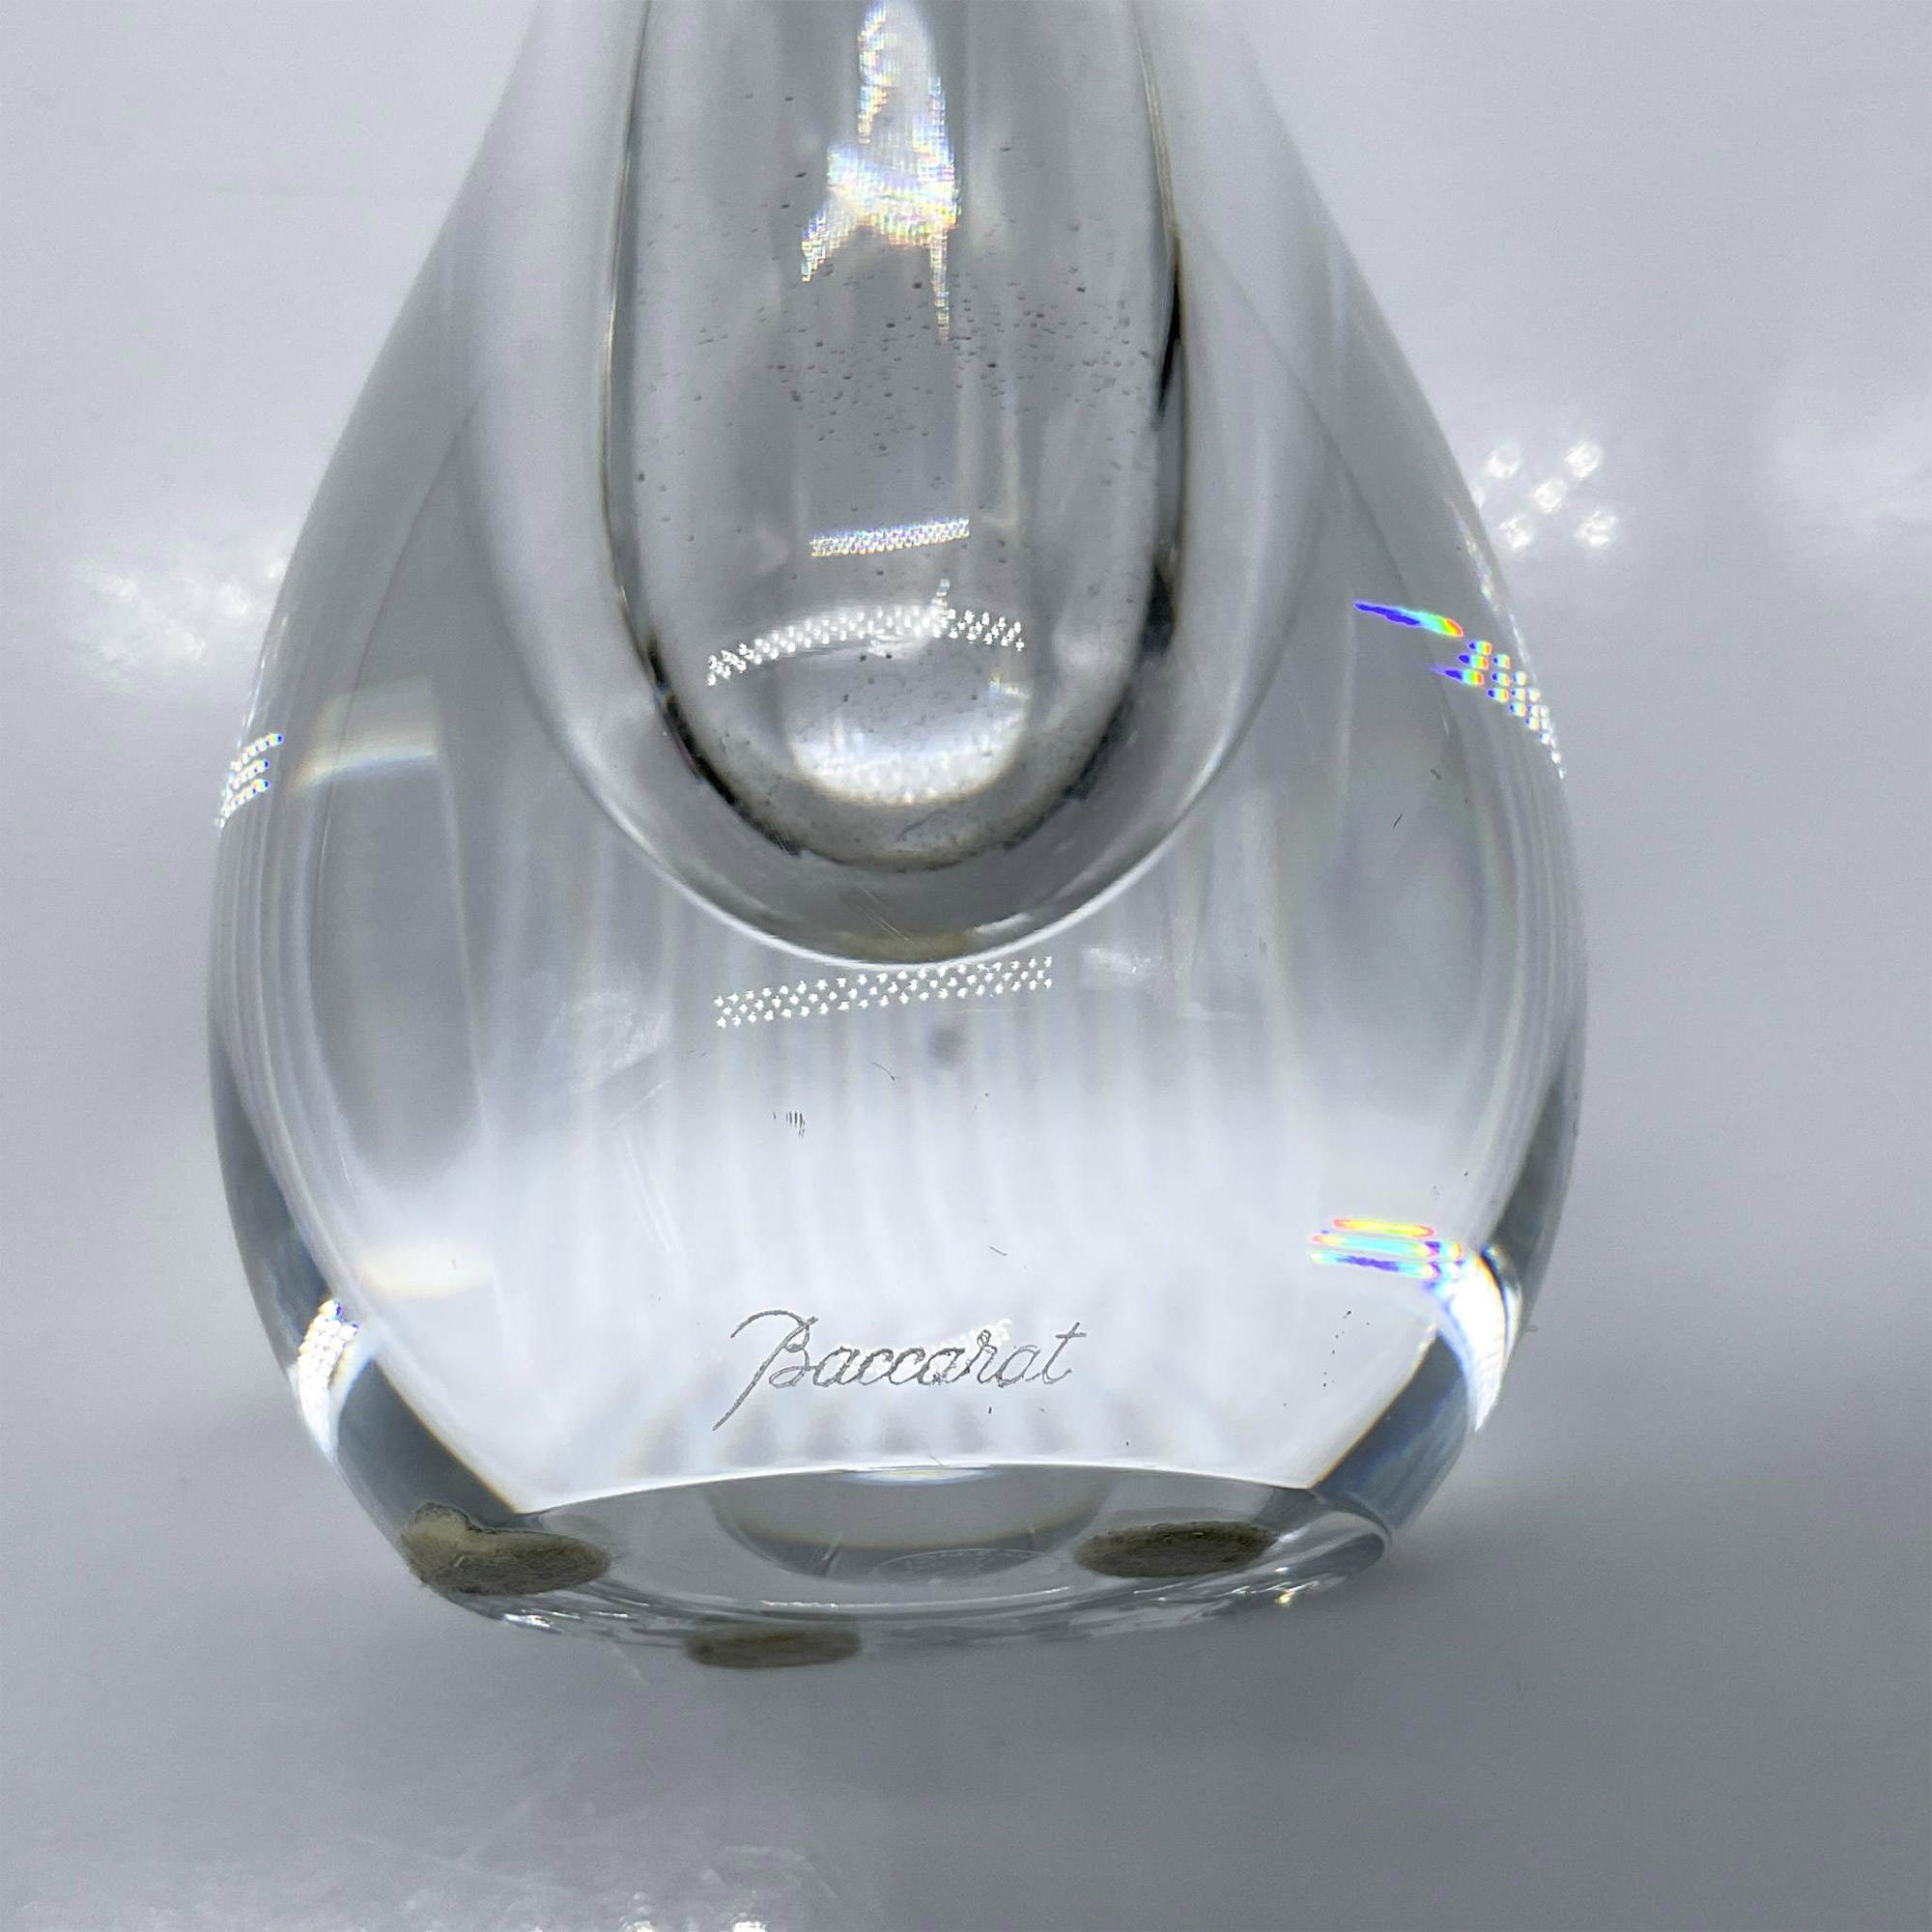 Baccarat Crystal Pear Shaped Vase - Image 4 of 4